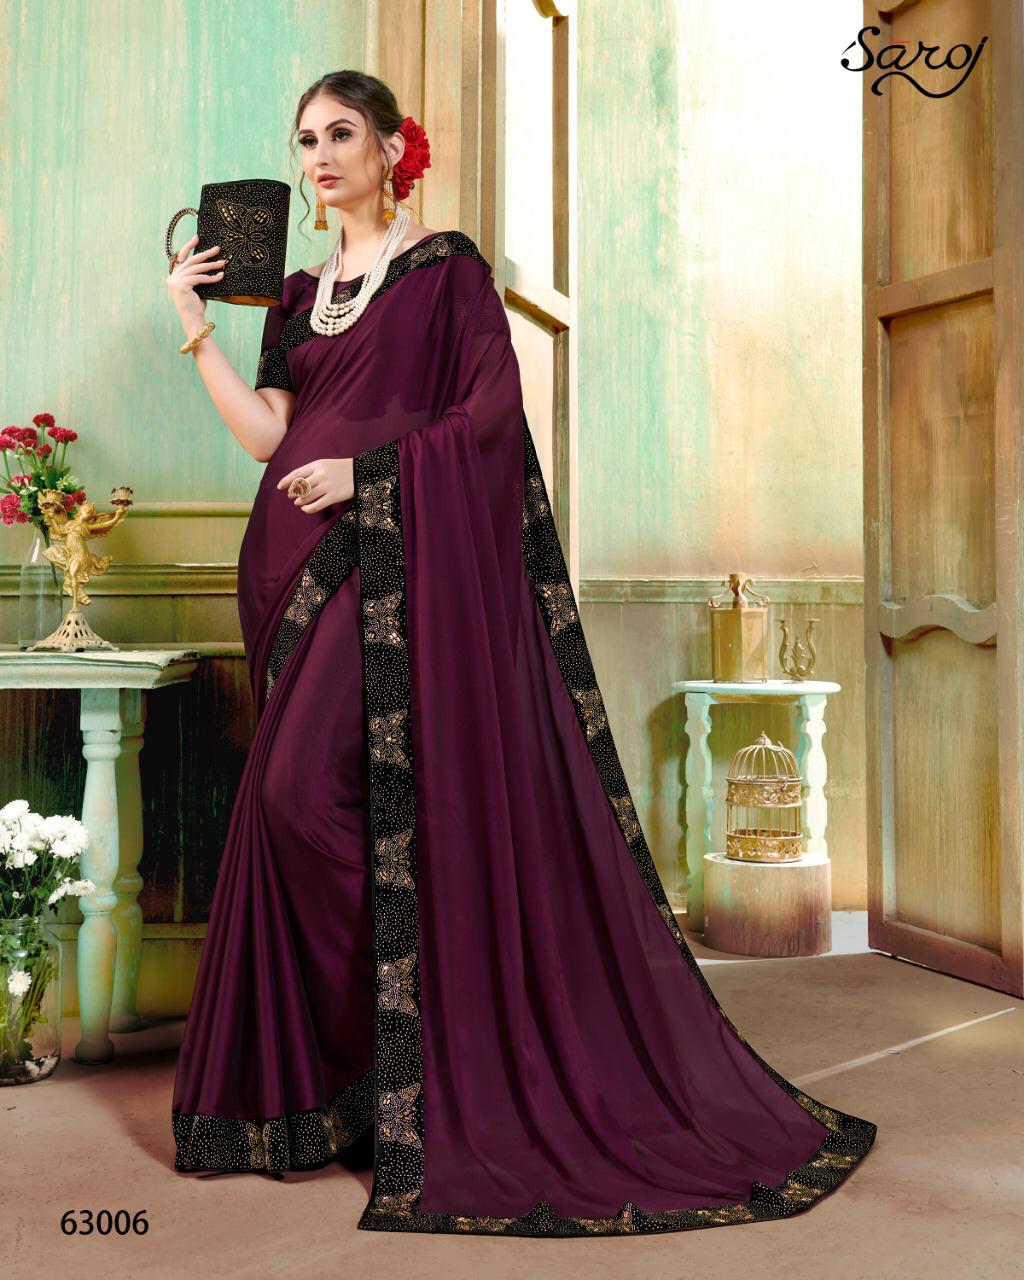 Saroj Sapphire amazing style sarees in factory prices